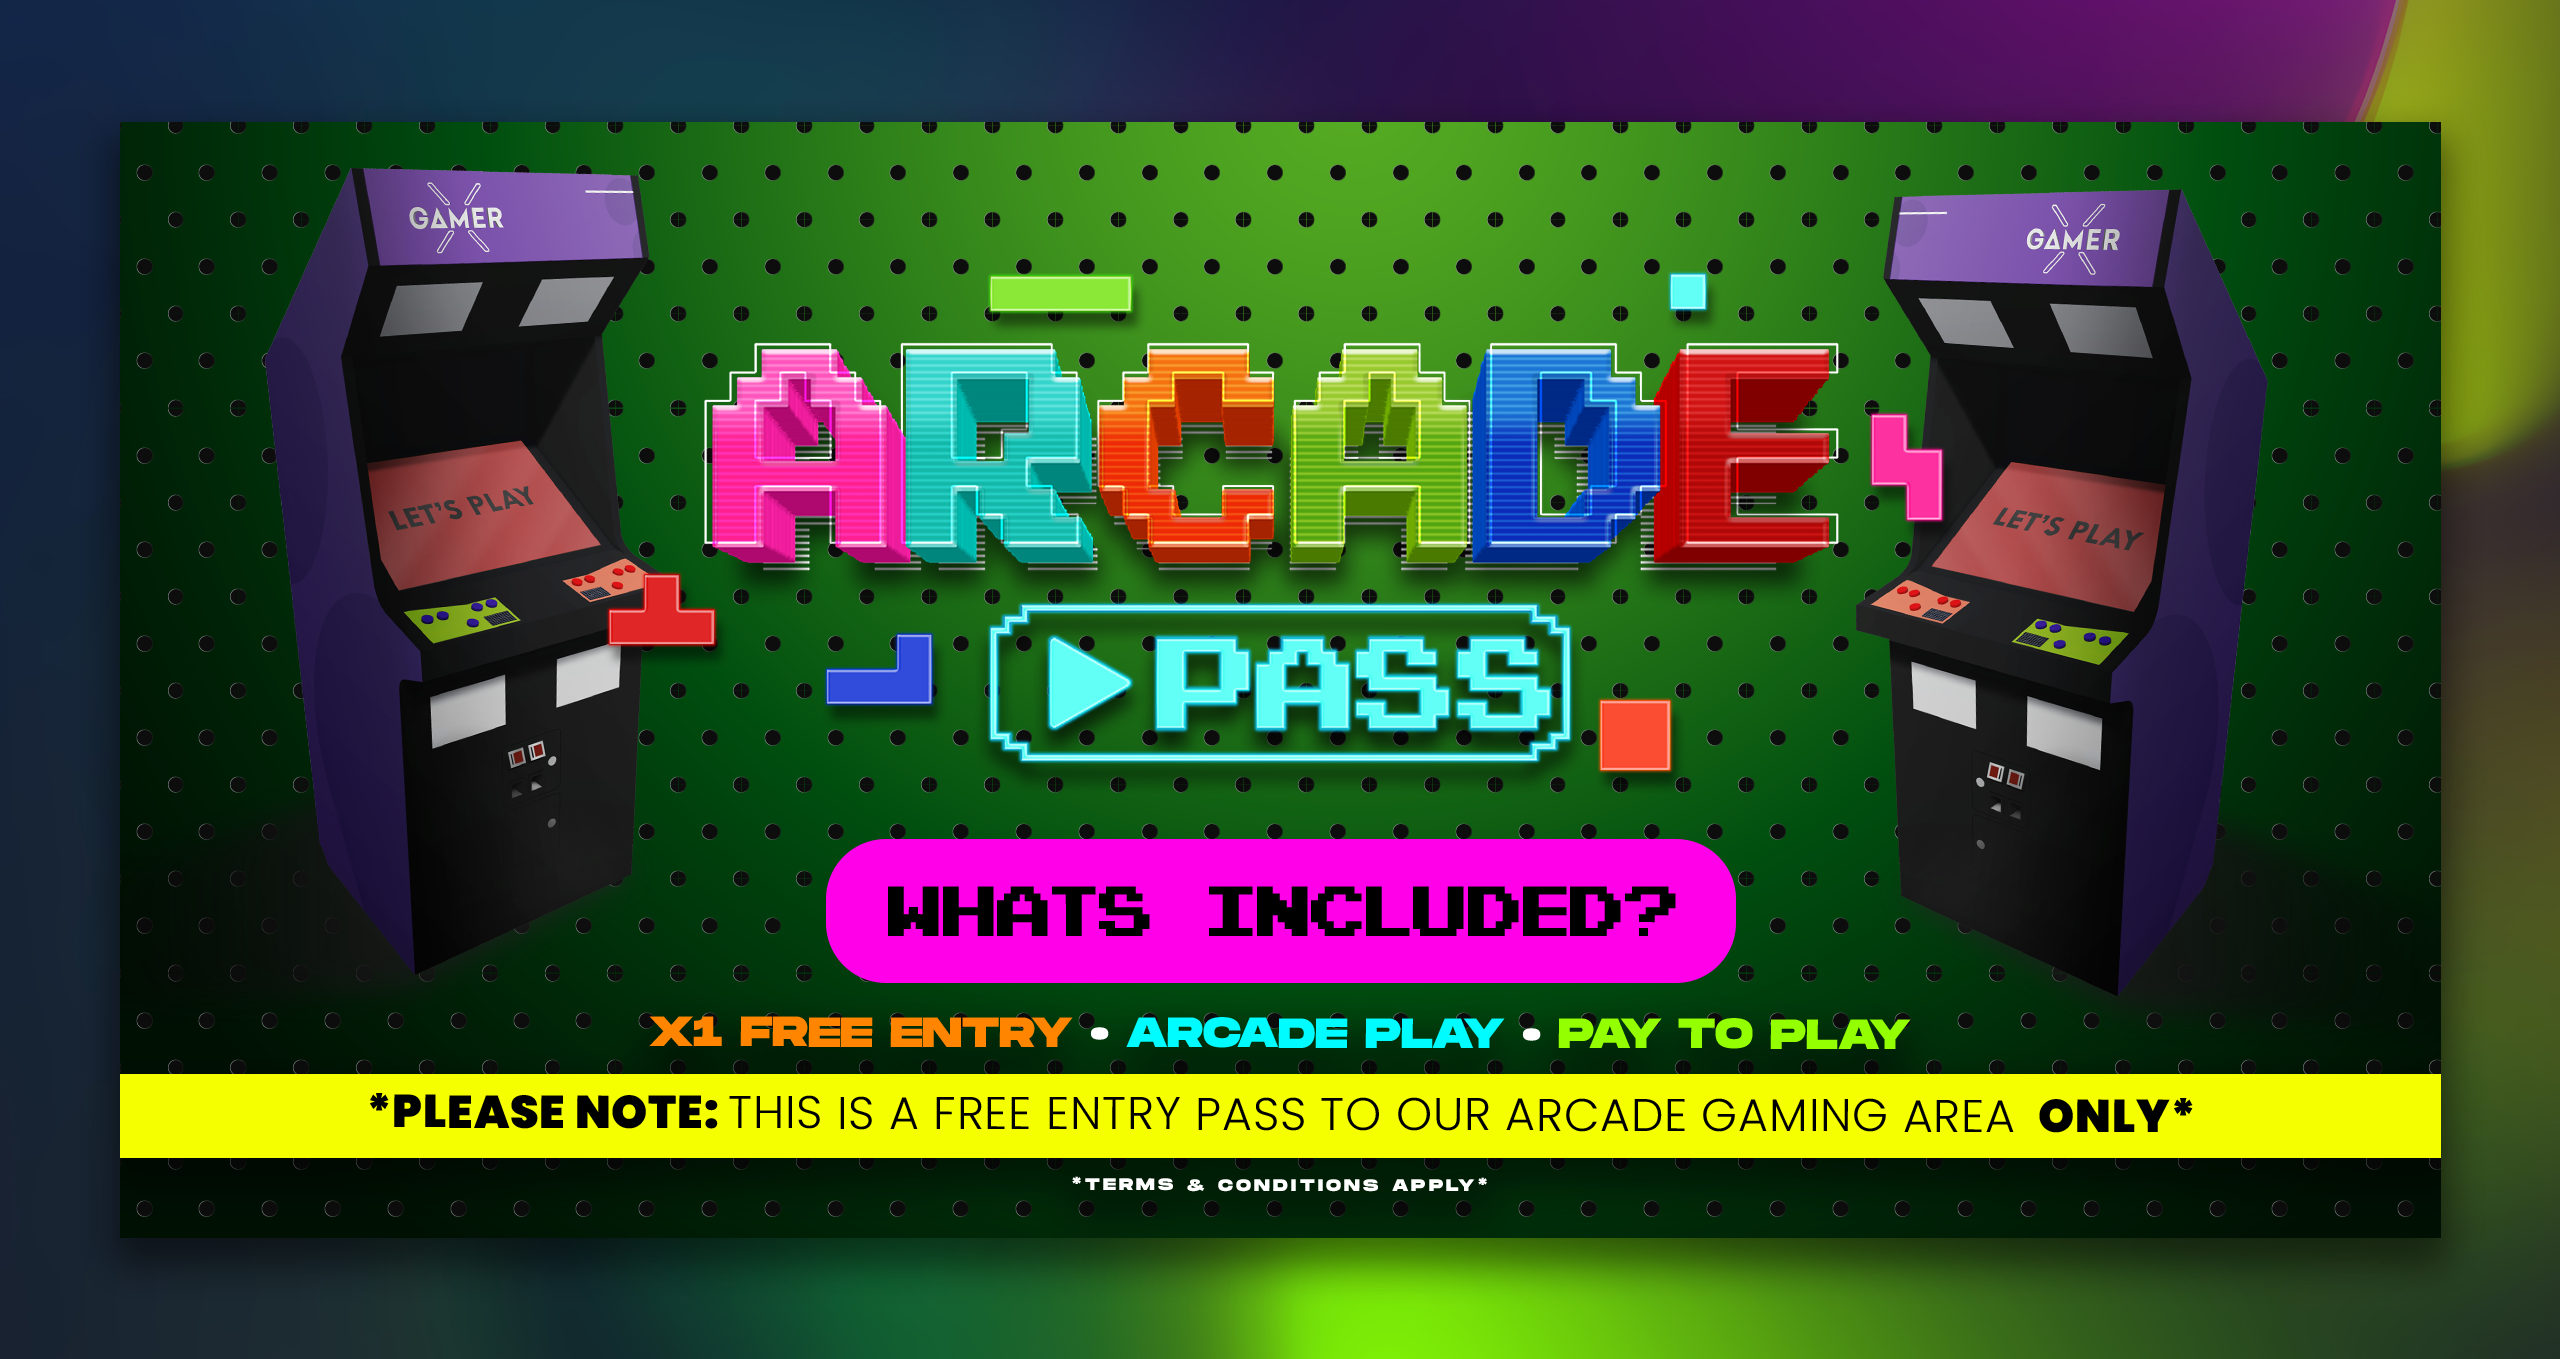 Arcade Pass Panel - ARCADE ONLY